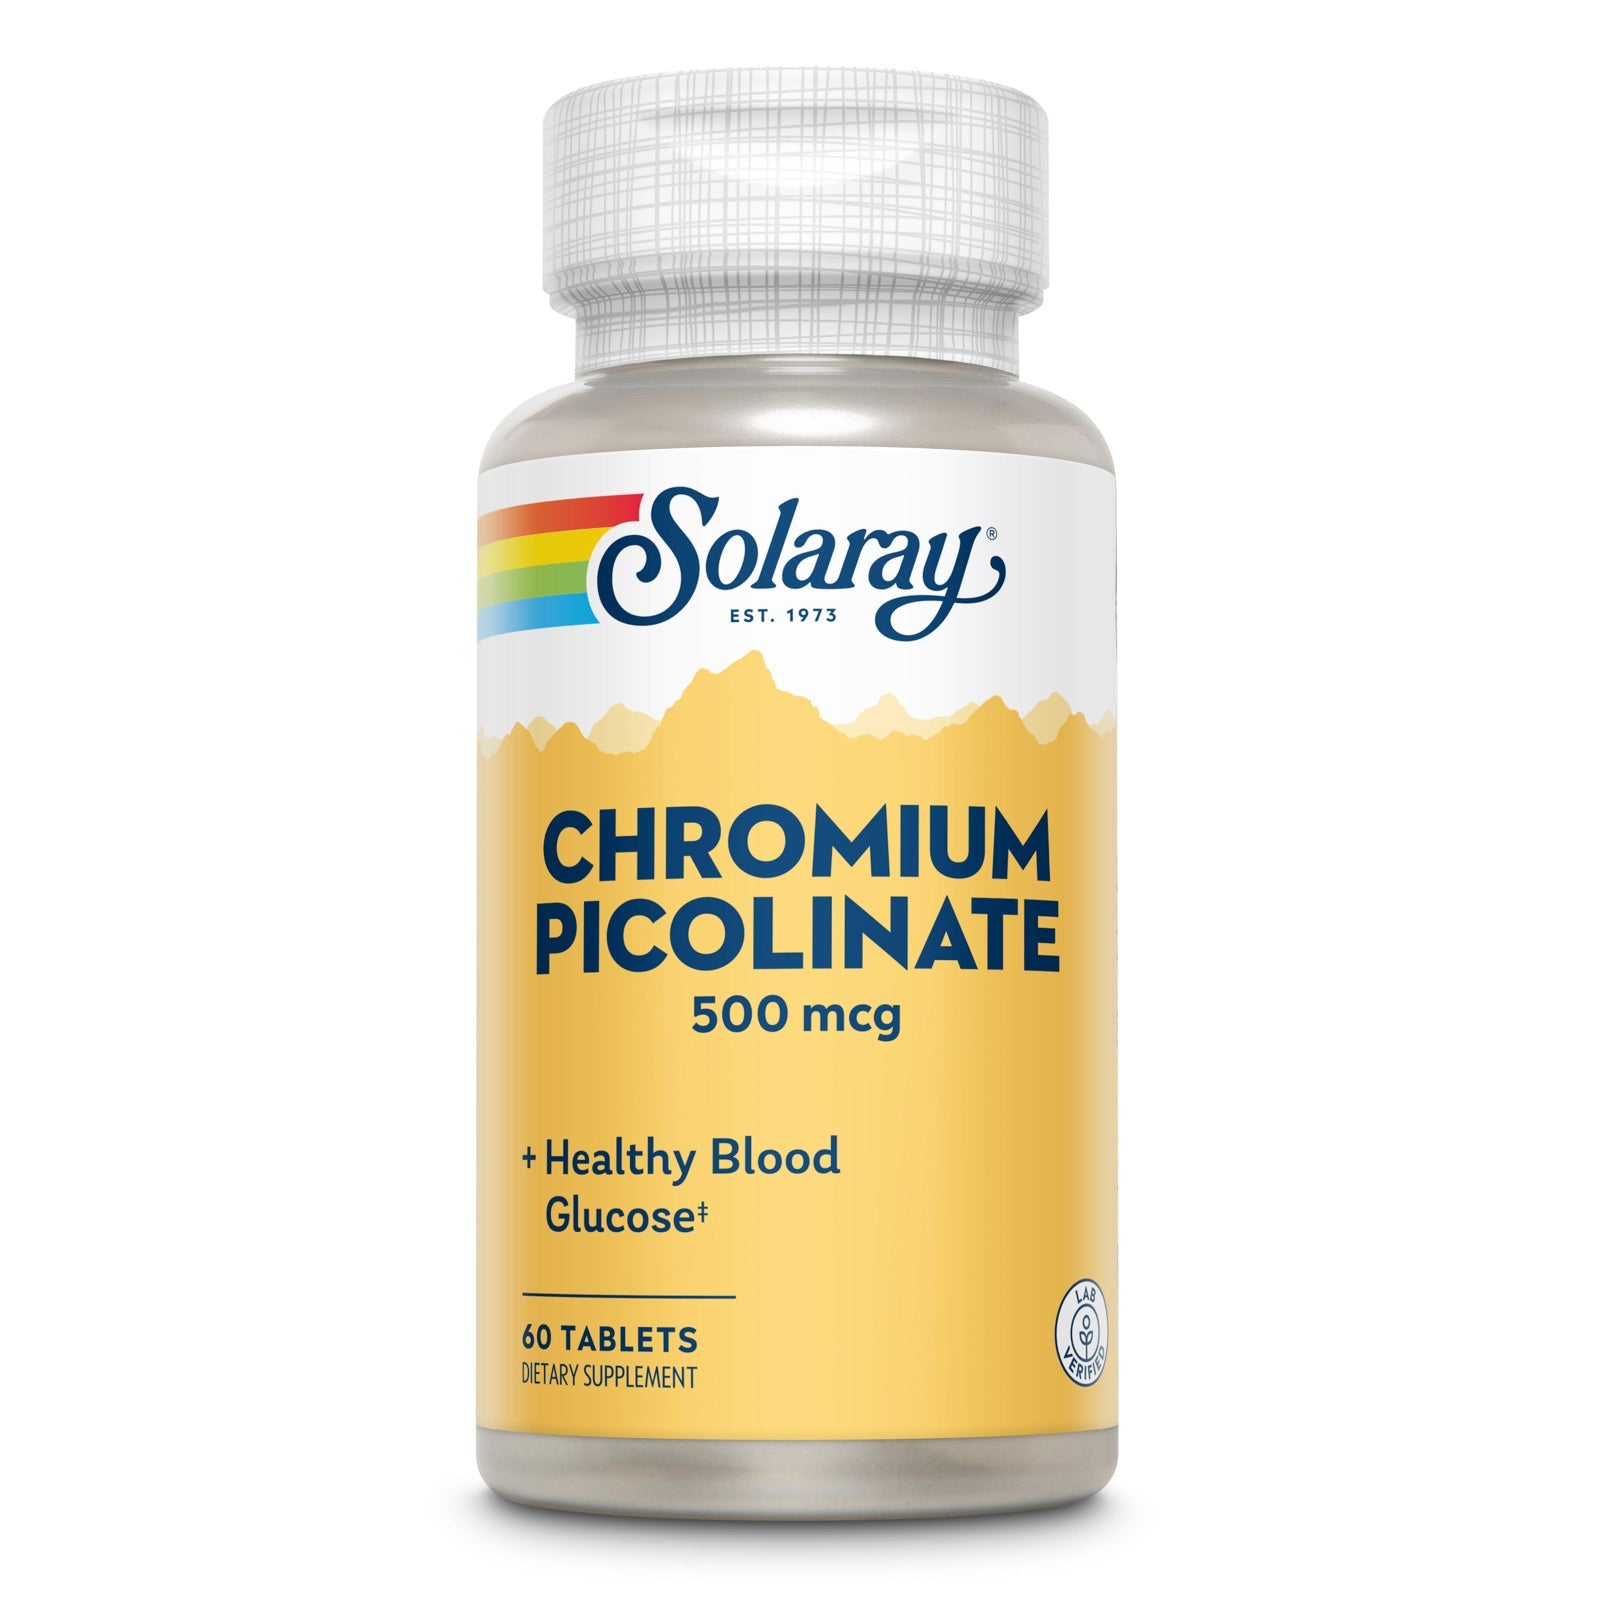 Solaray Chromium Picolinate 500 Mcg, 60 Tablets